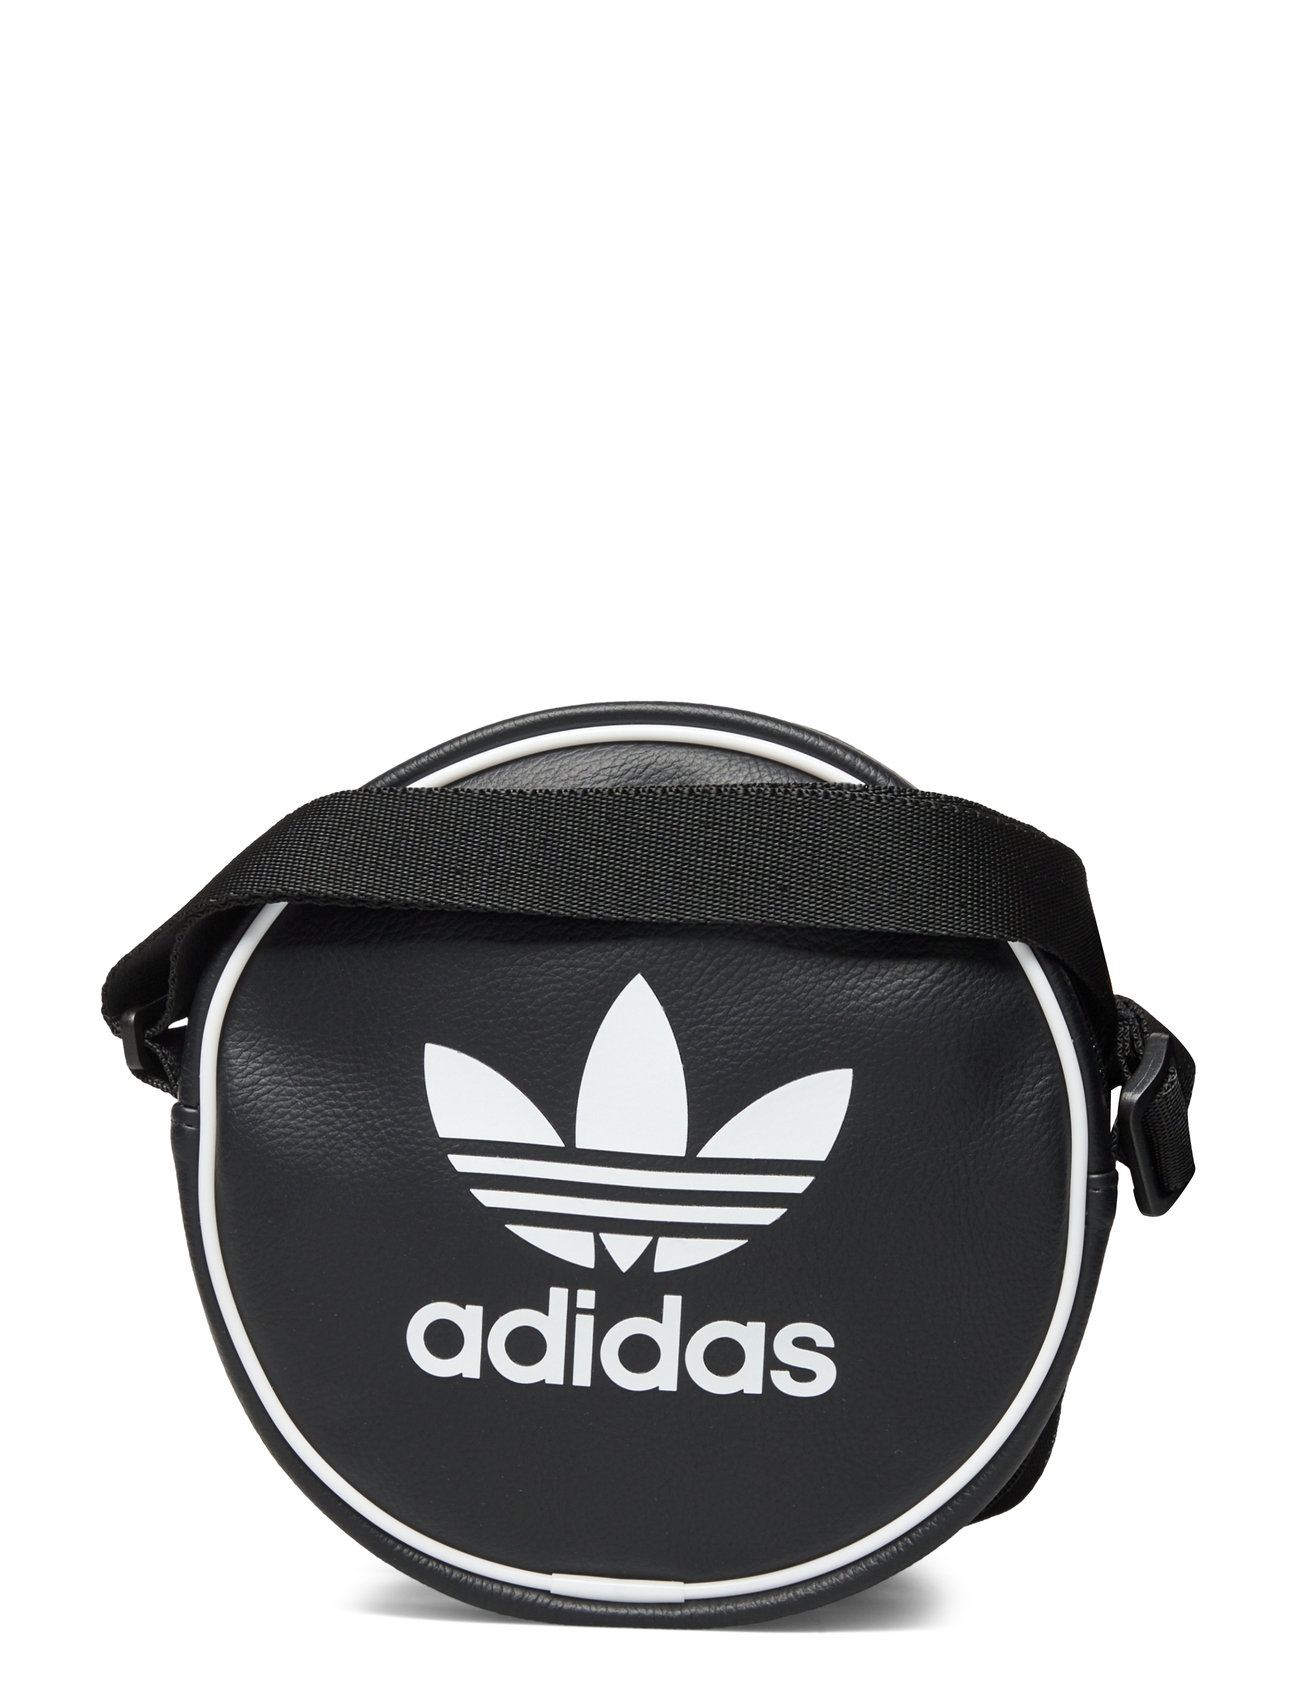 adidas Originals trefoil shoulder bag in black | ASOS